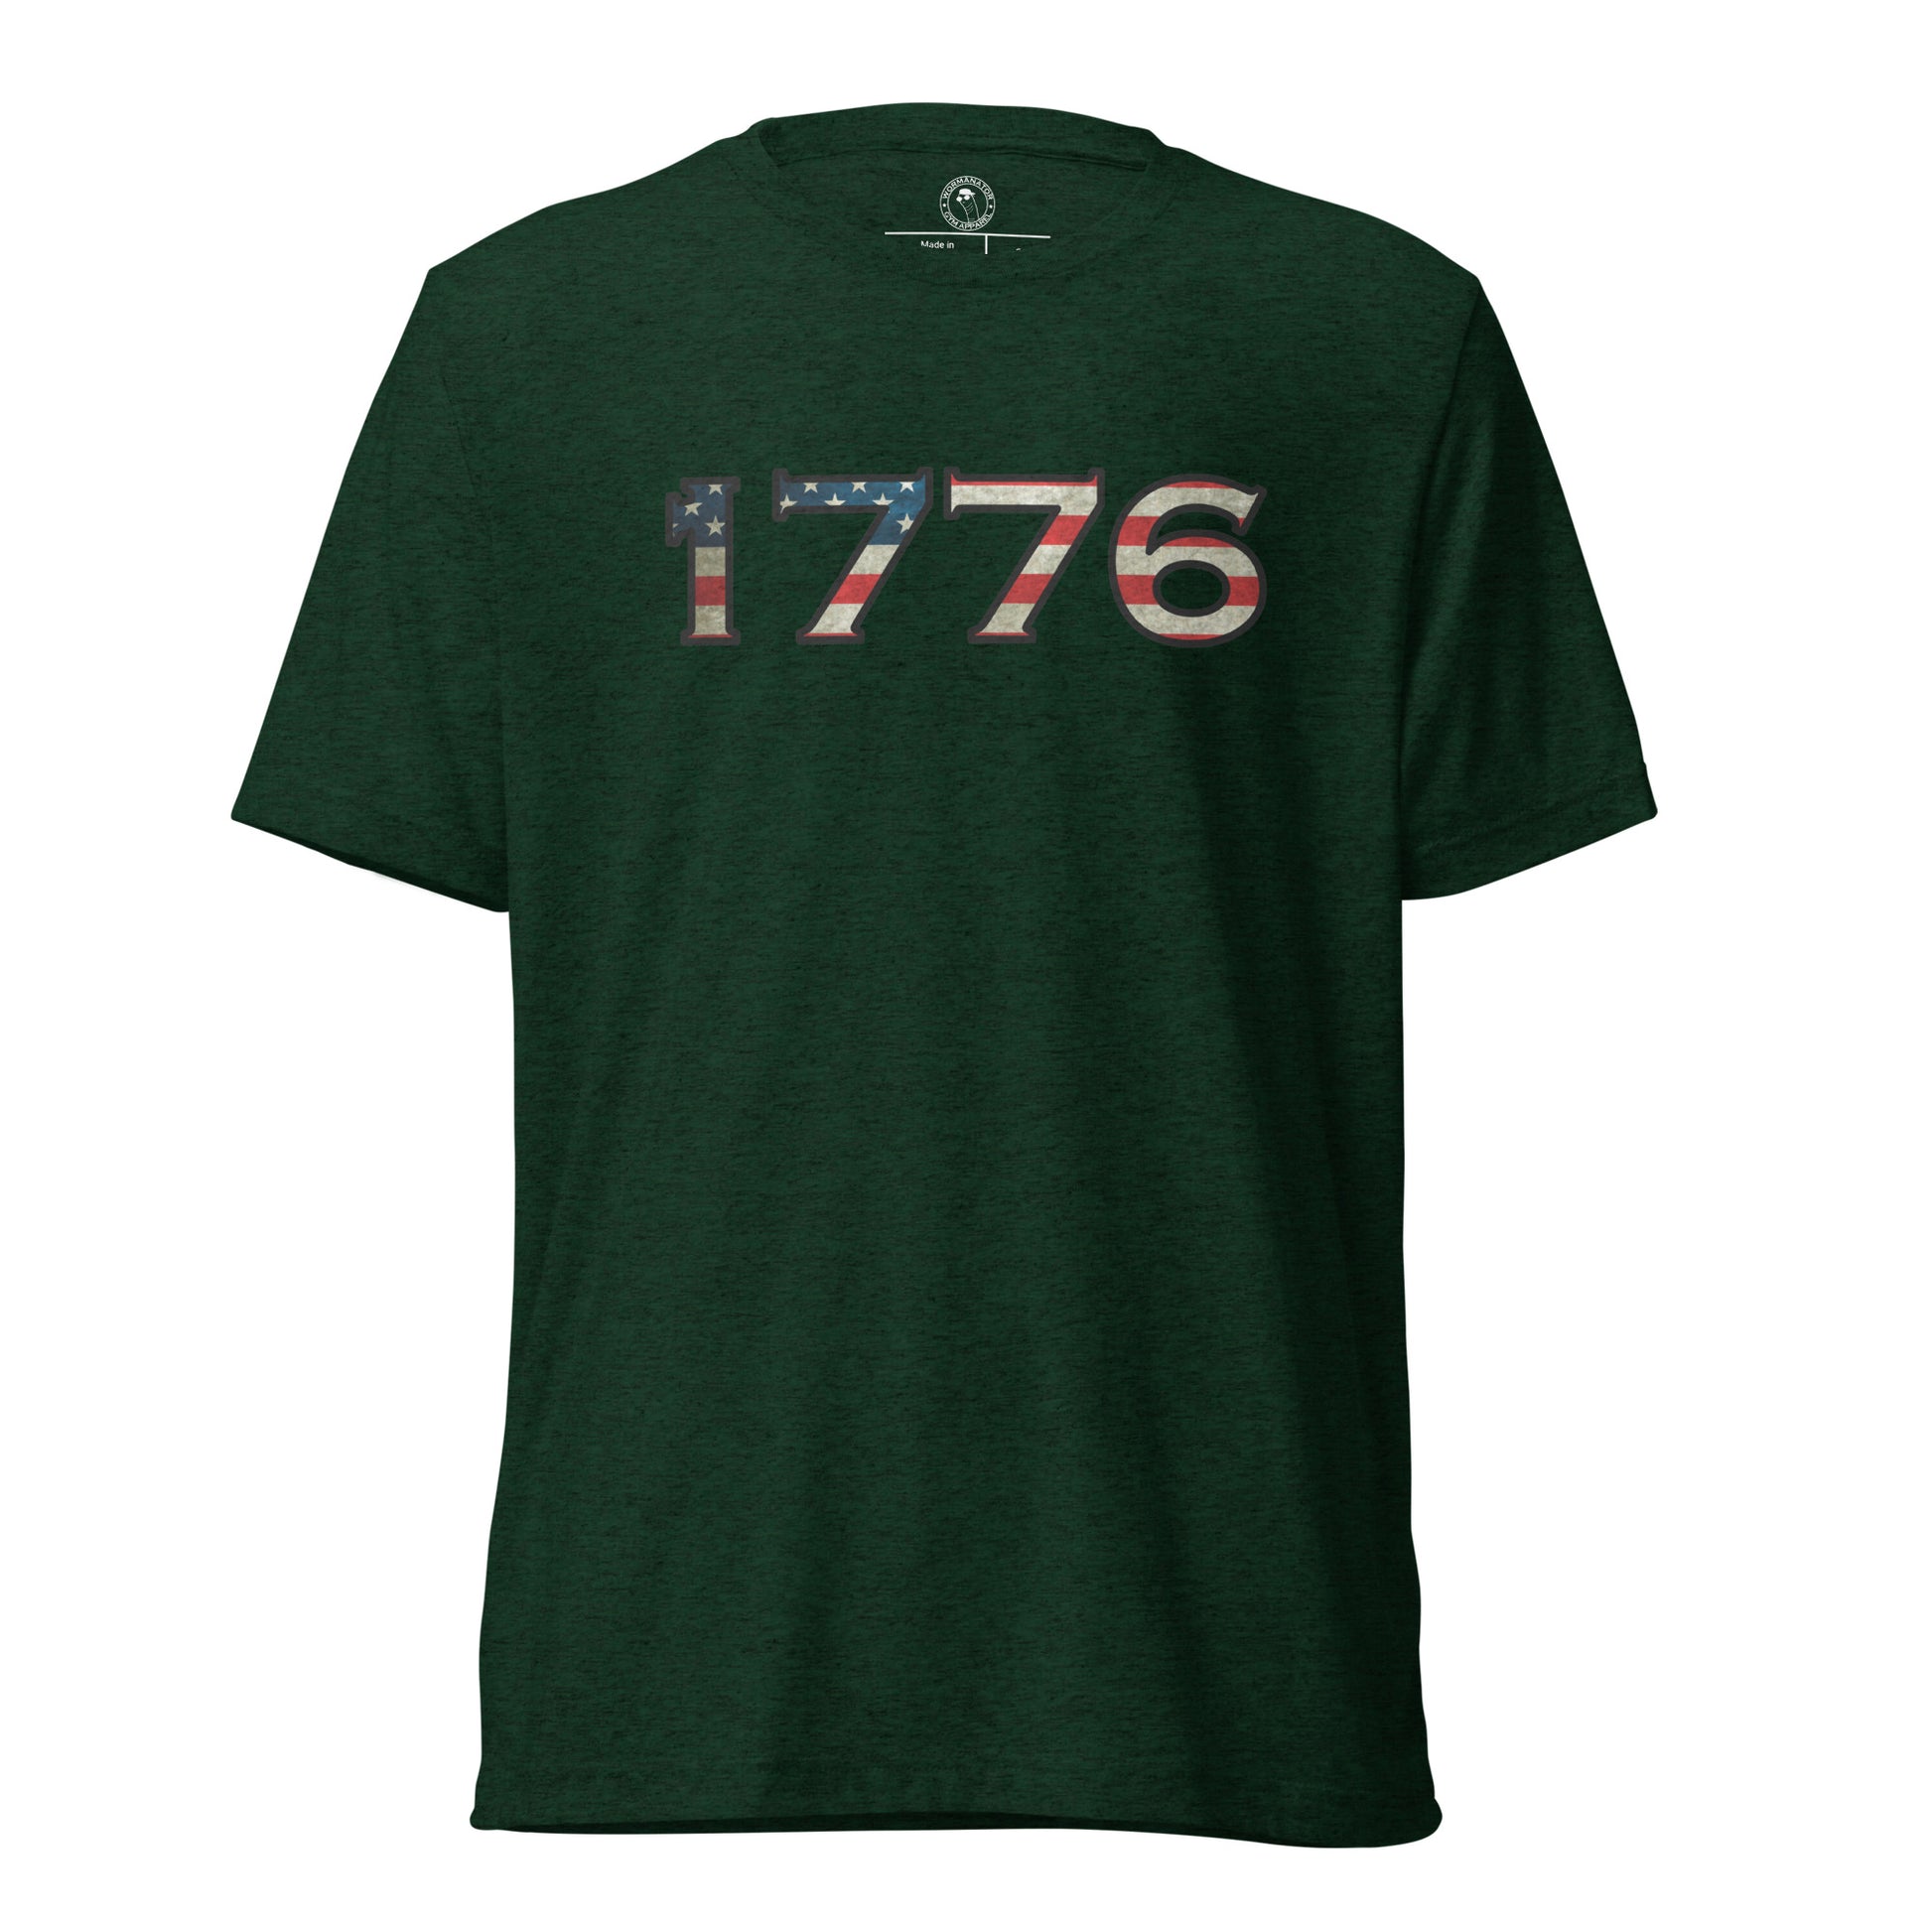 1776 T-Shirt in Emerald Triblend